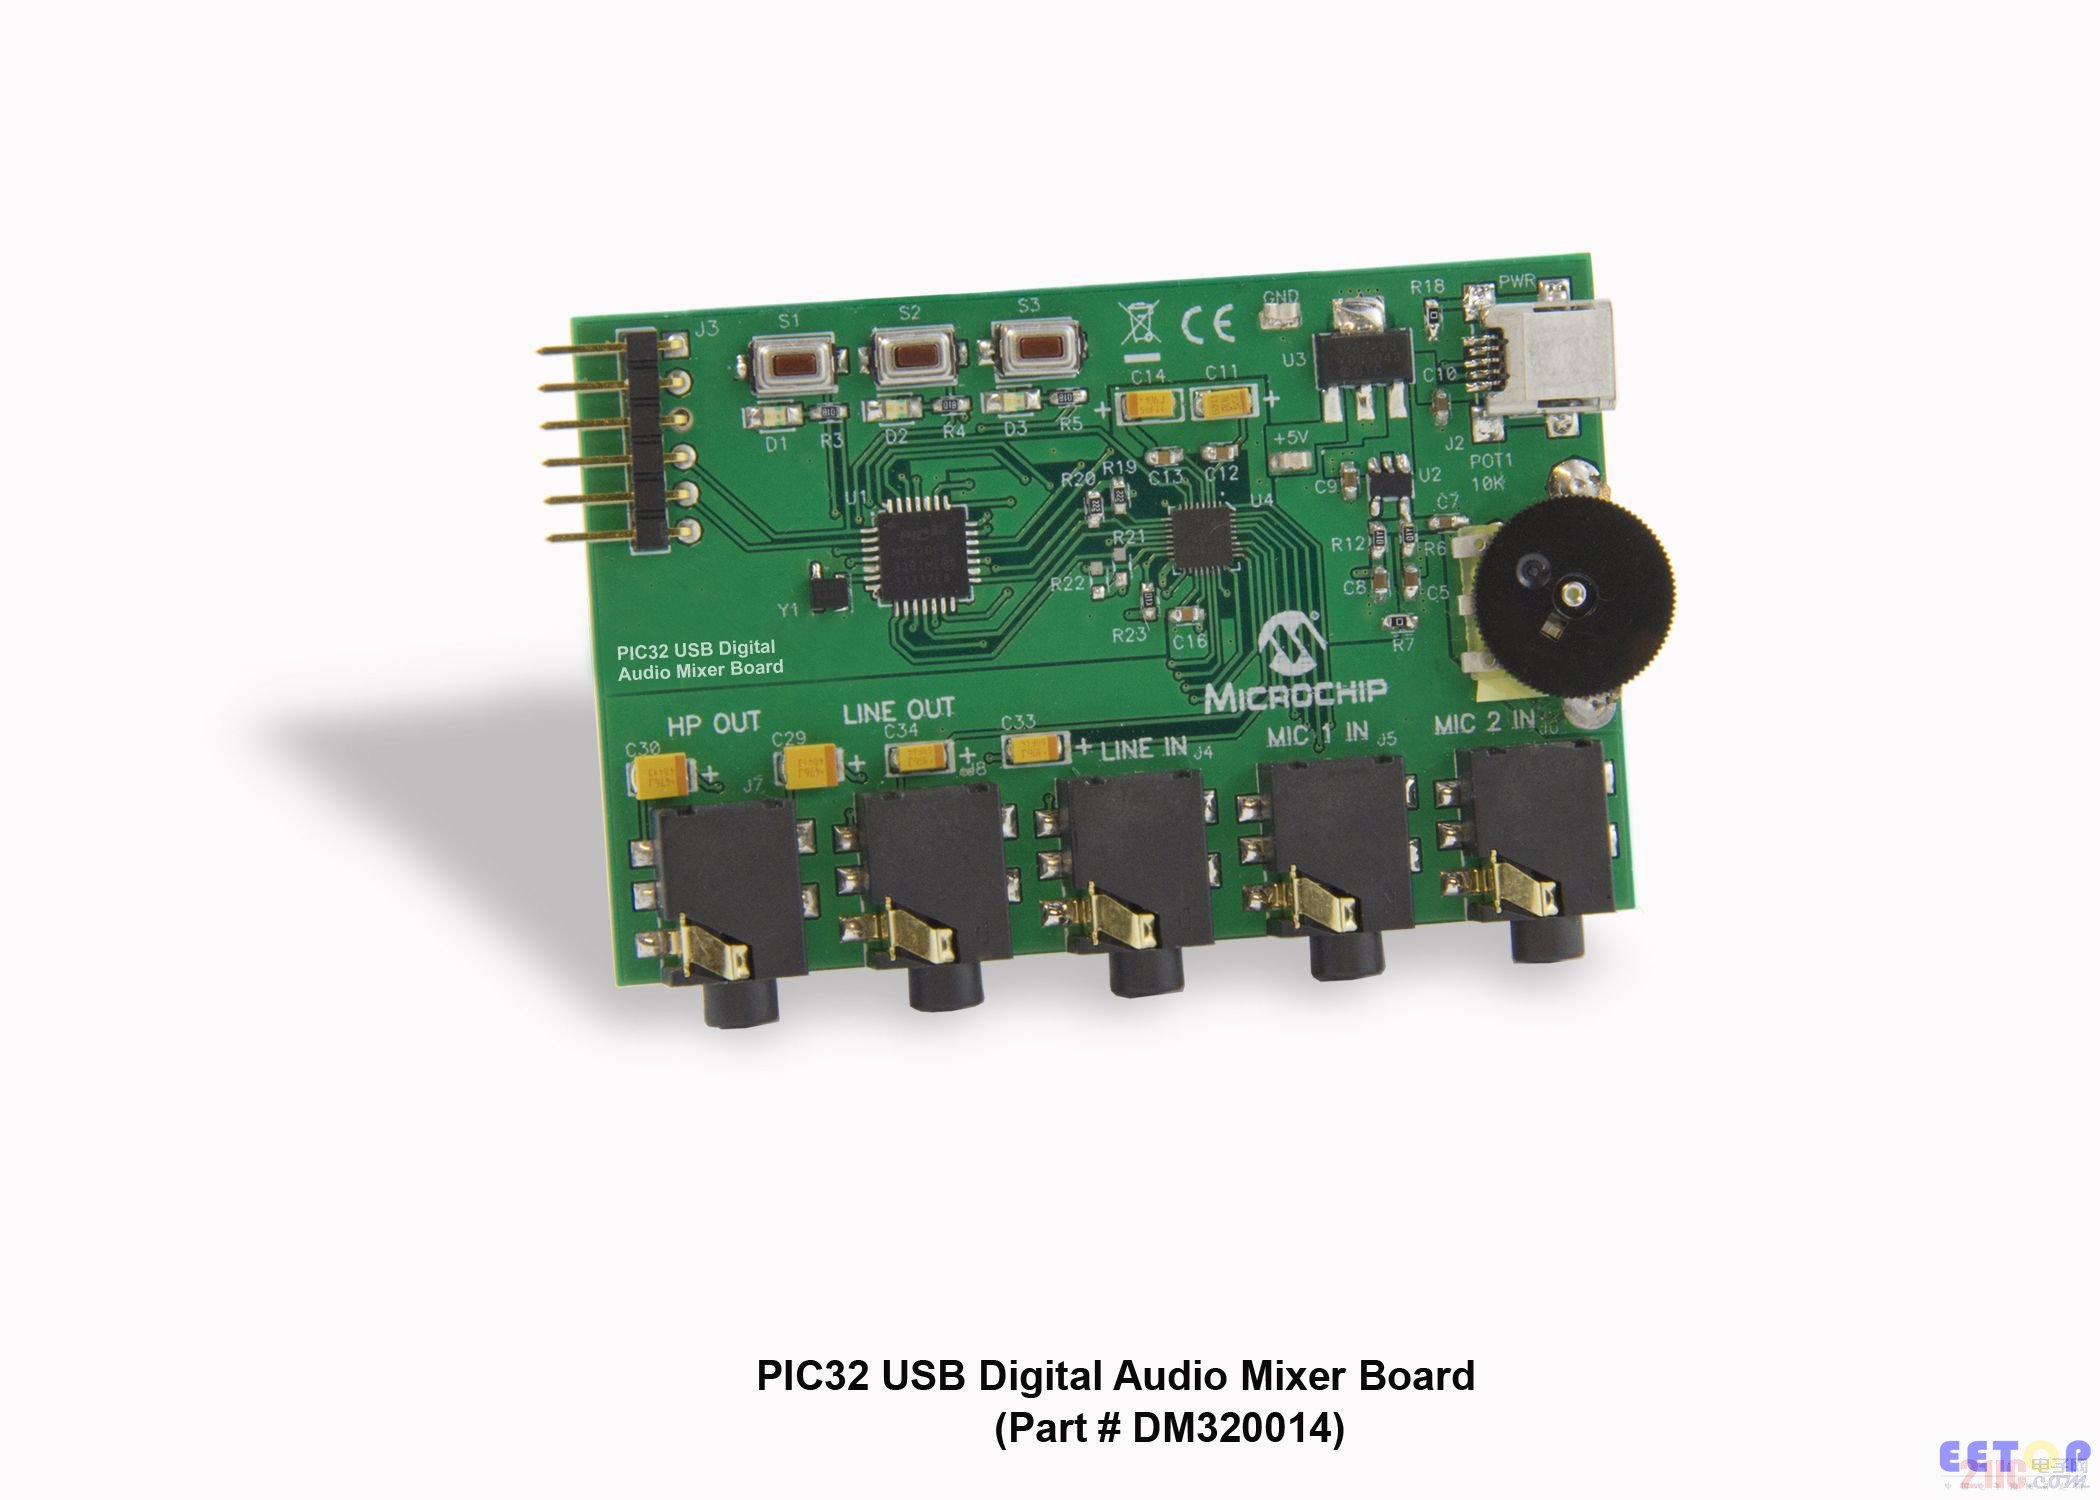 DM320014_PIC32 USB Digital Audio Mixer Board_7 X 5